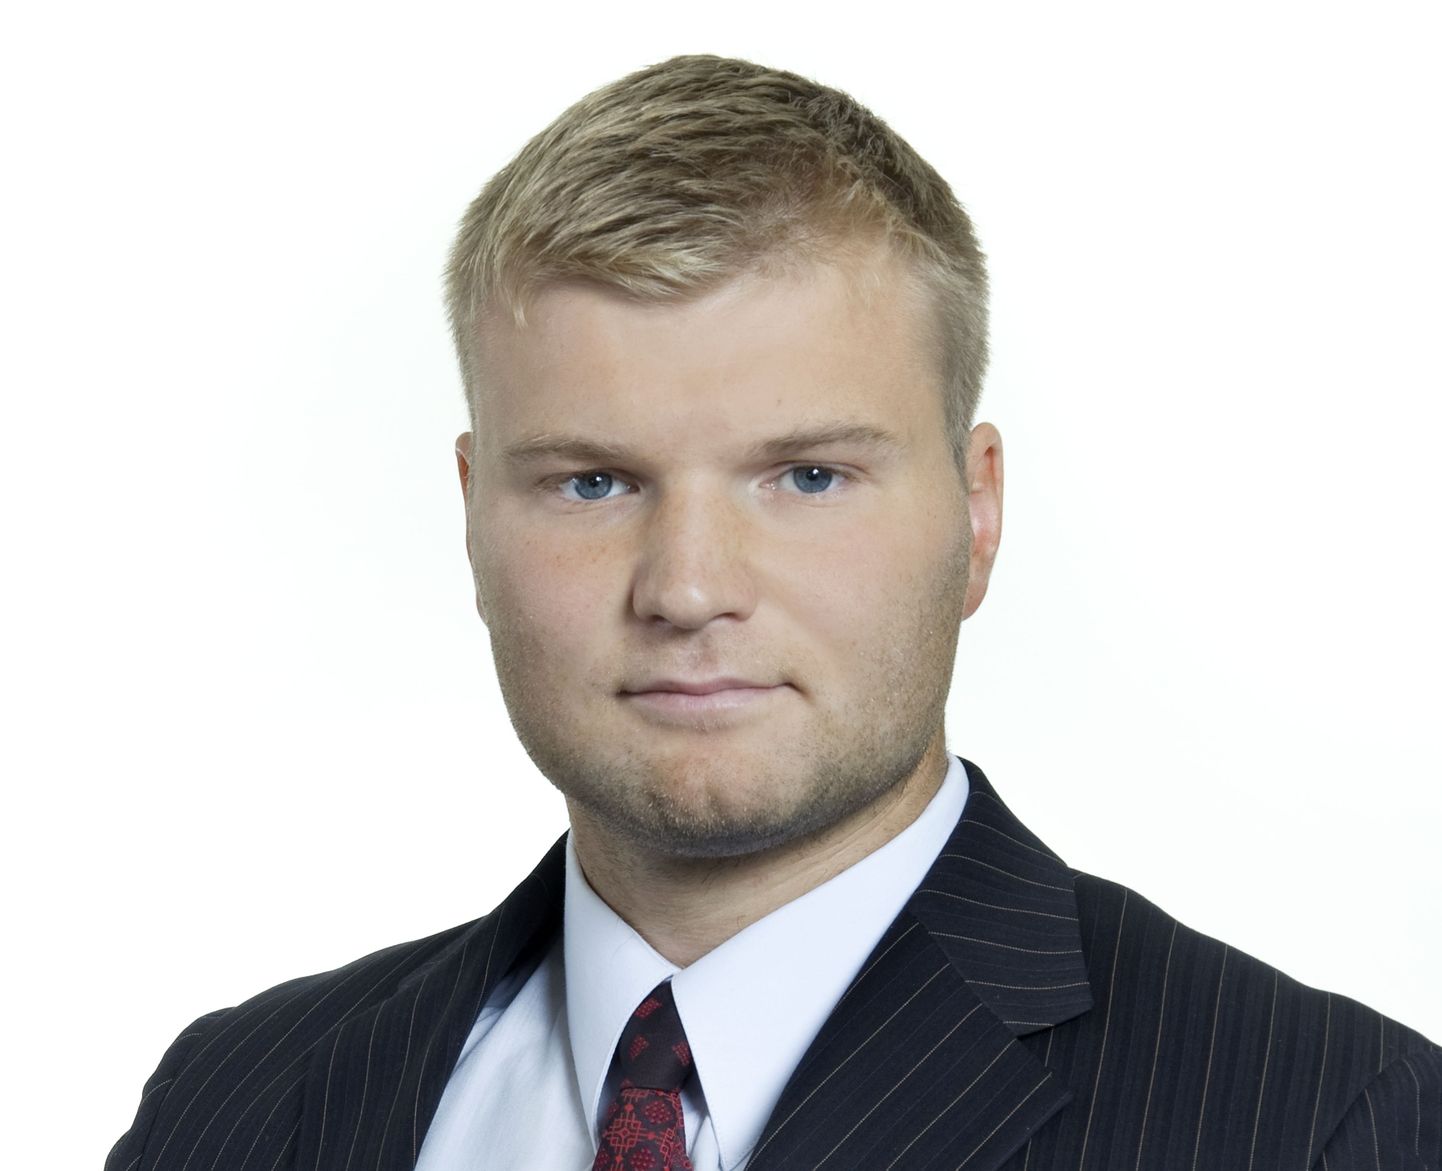 Лаури Лаатс - депутат Таллиннского городского собрания, социал-демократ